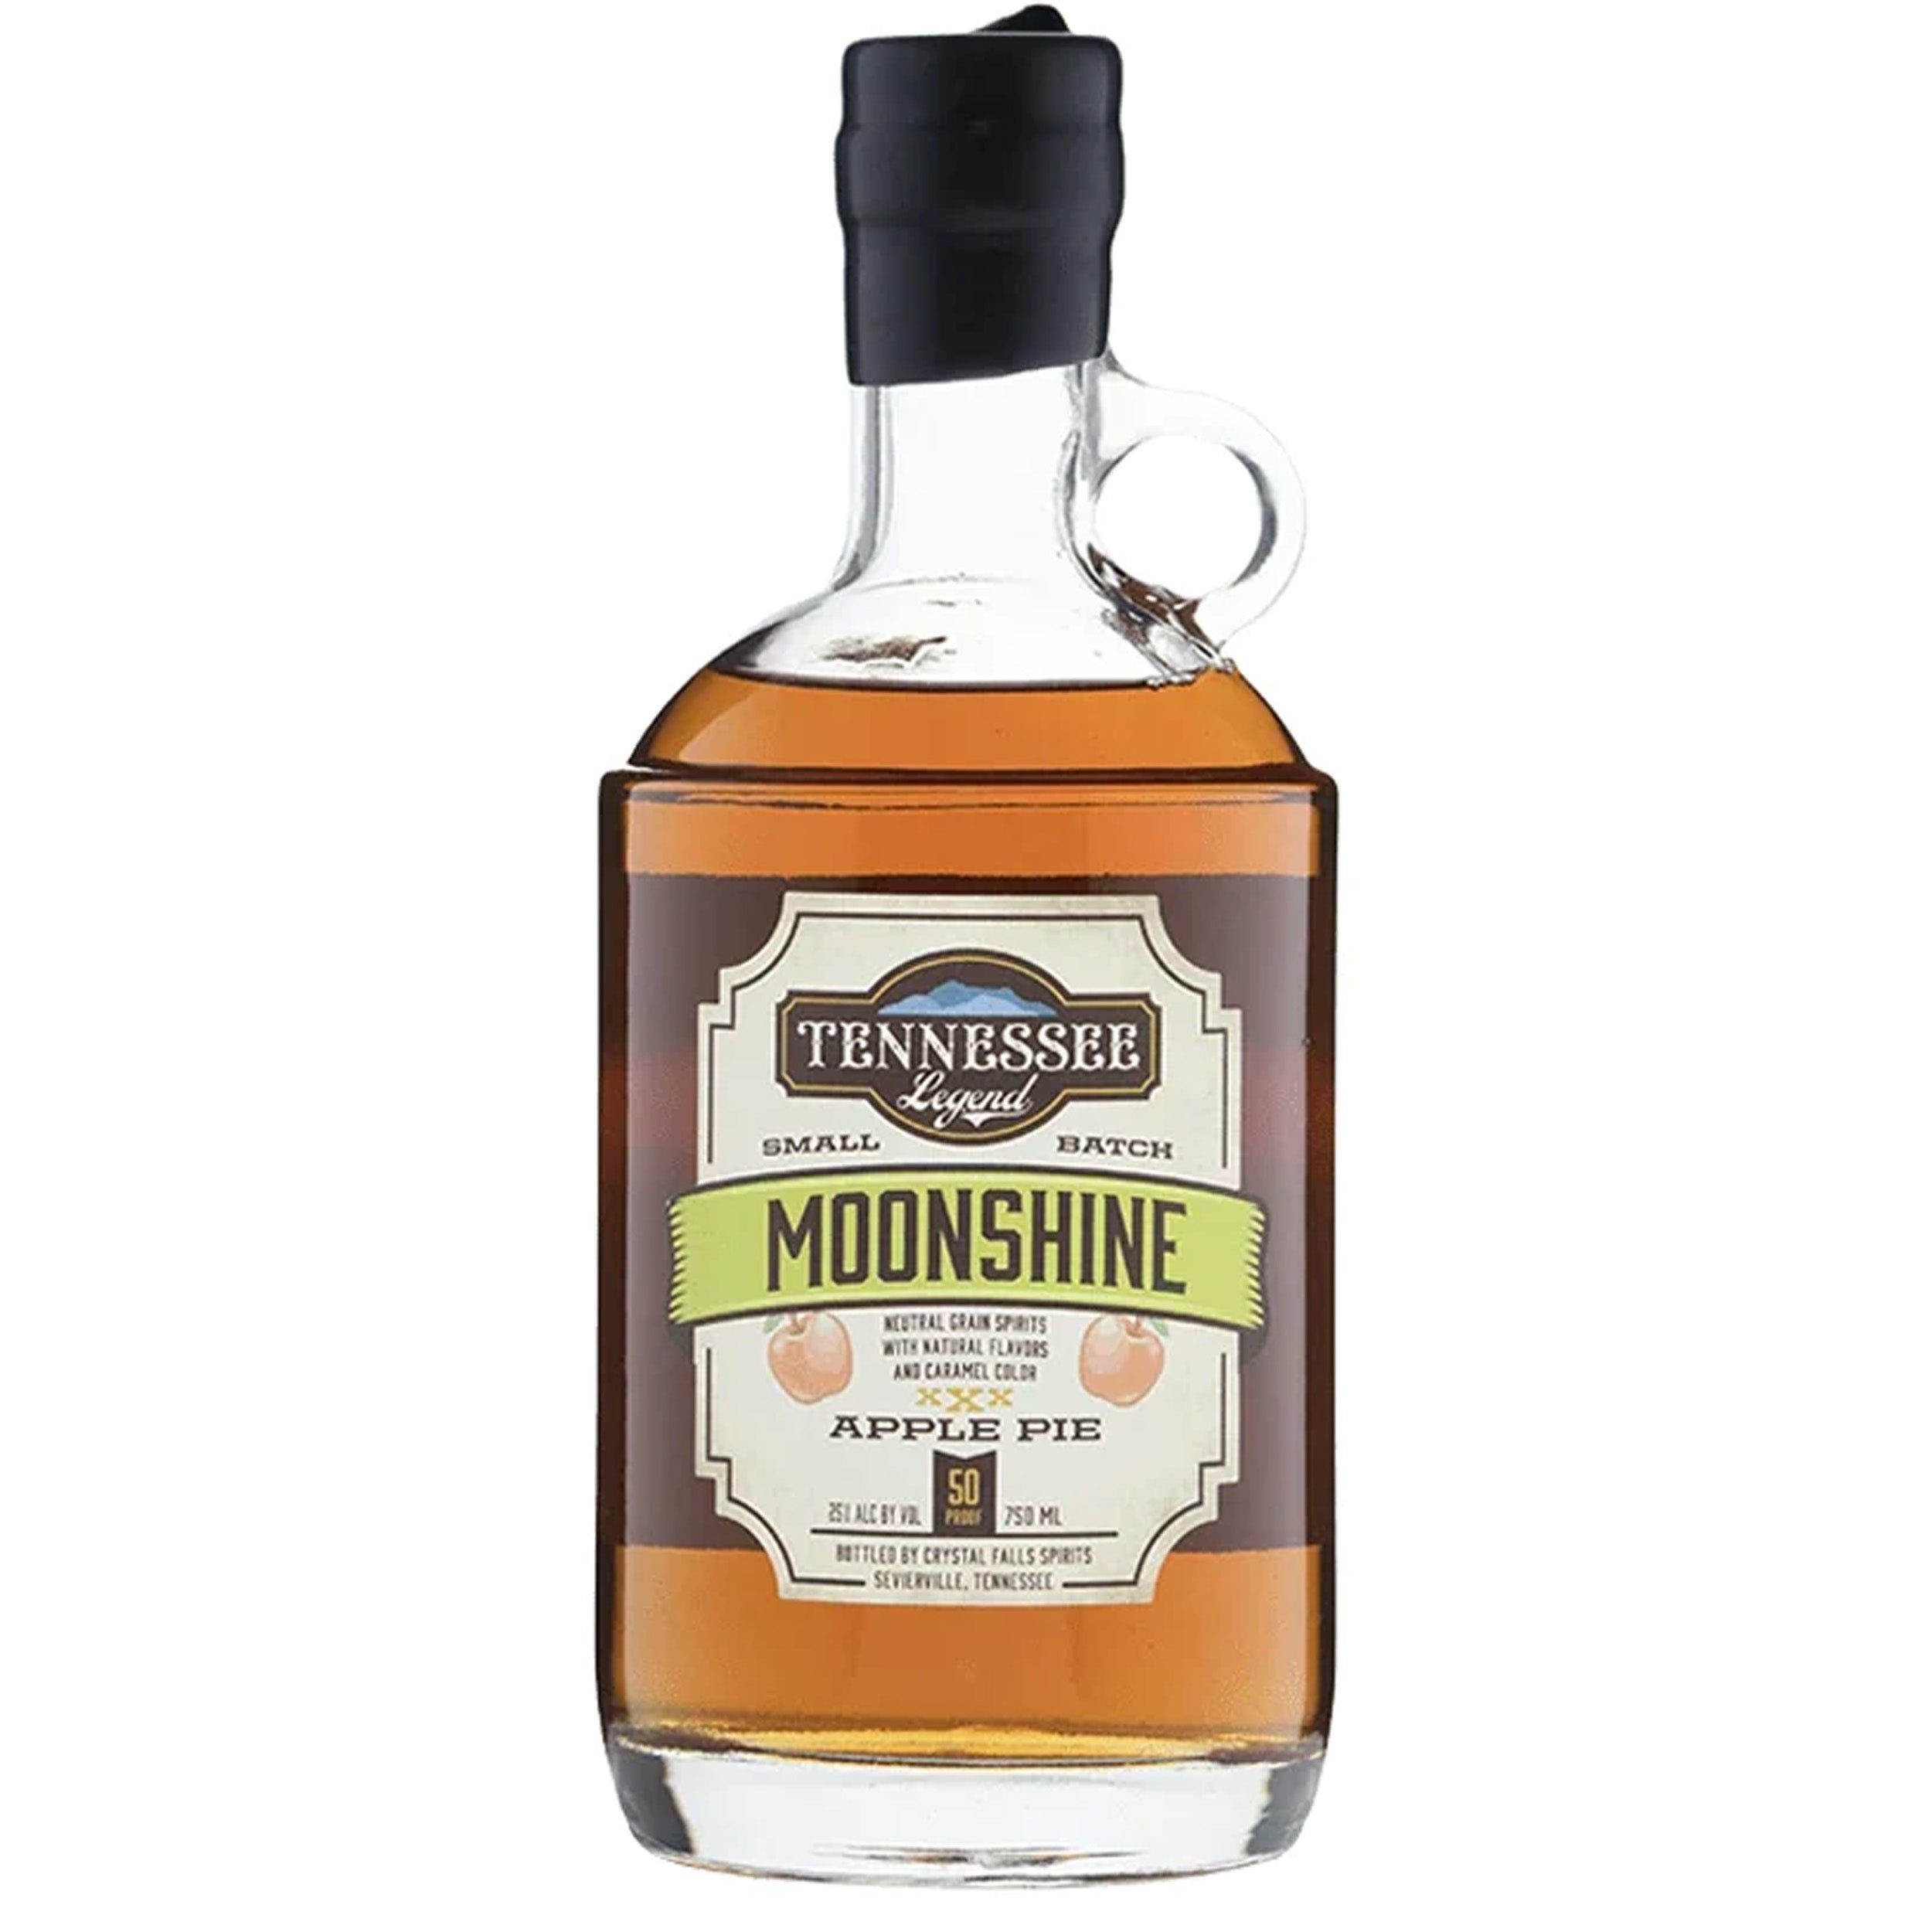 Tennessee Legend Apple Pie Moonshine